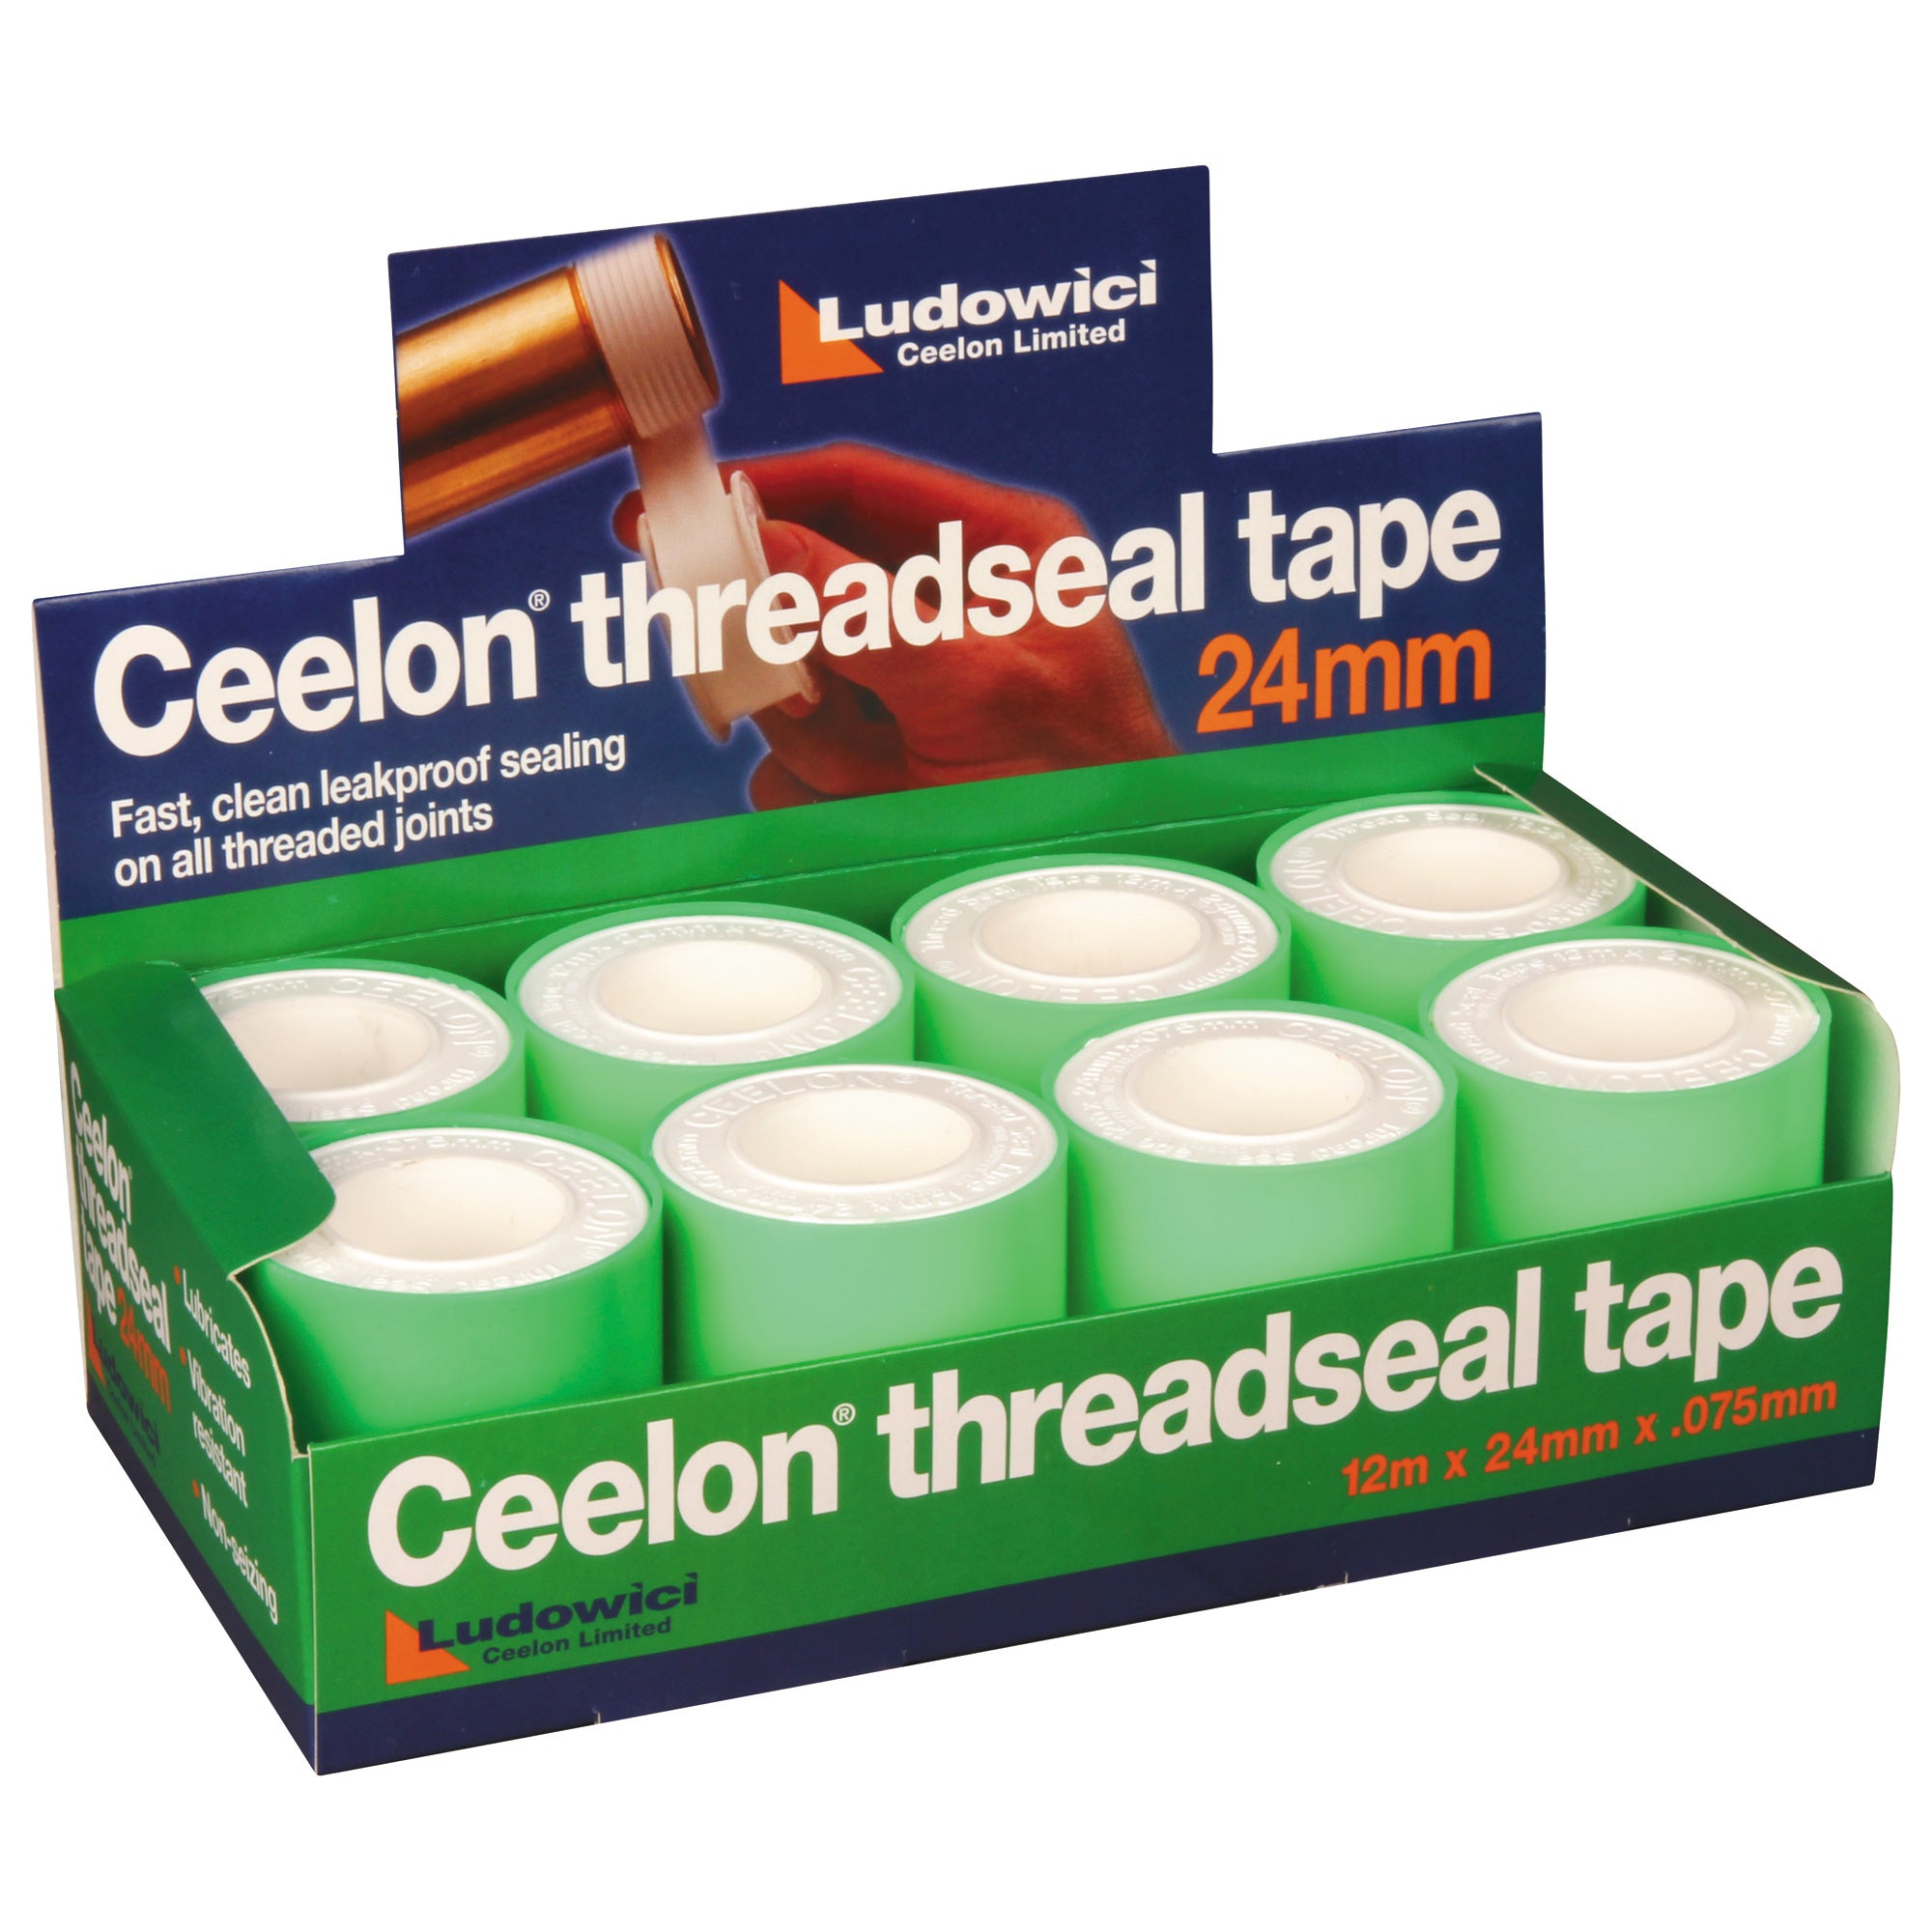 Ceelon PTFE Thread Seal Tape Box